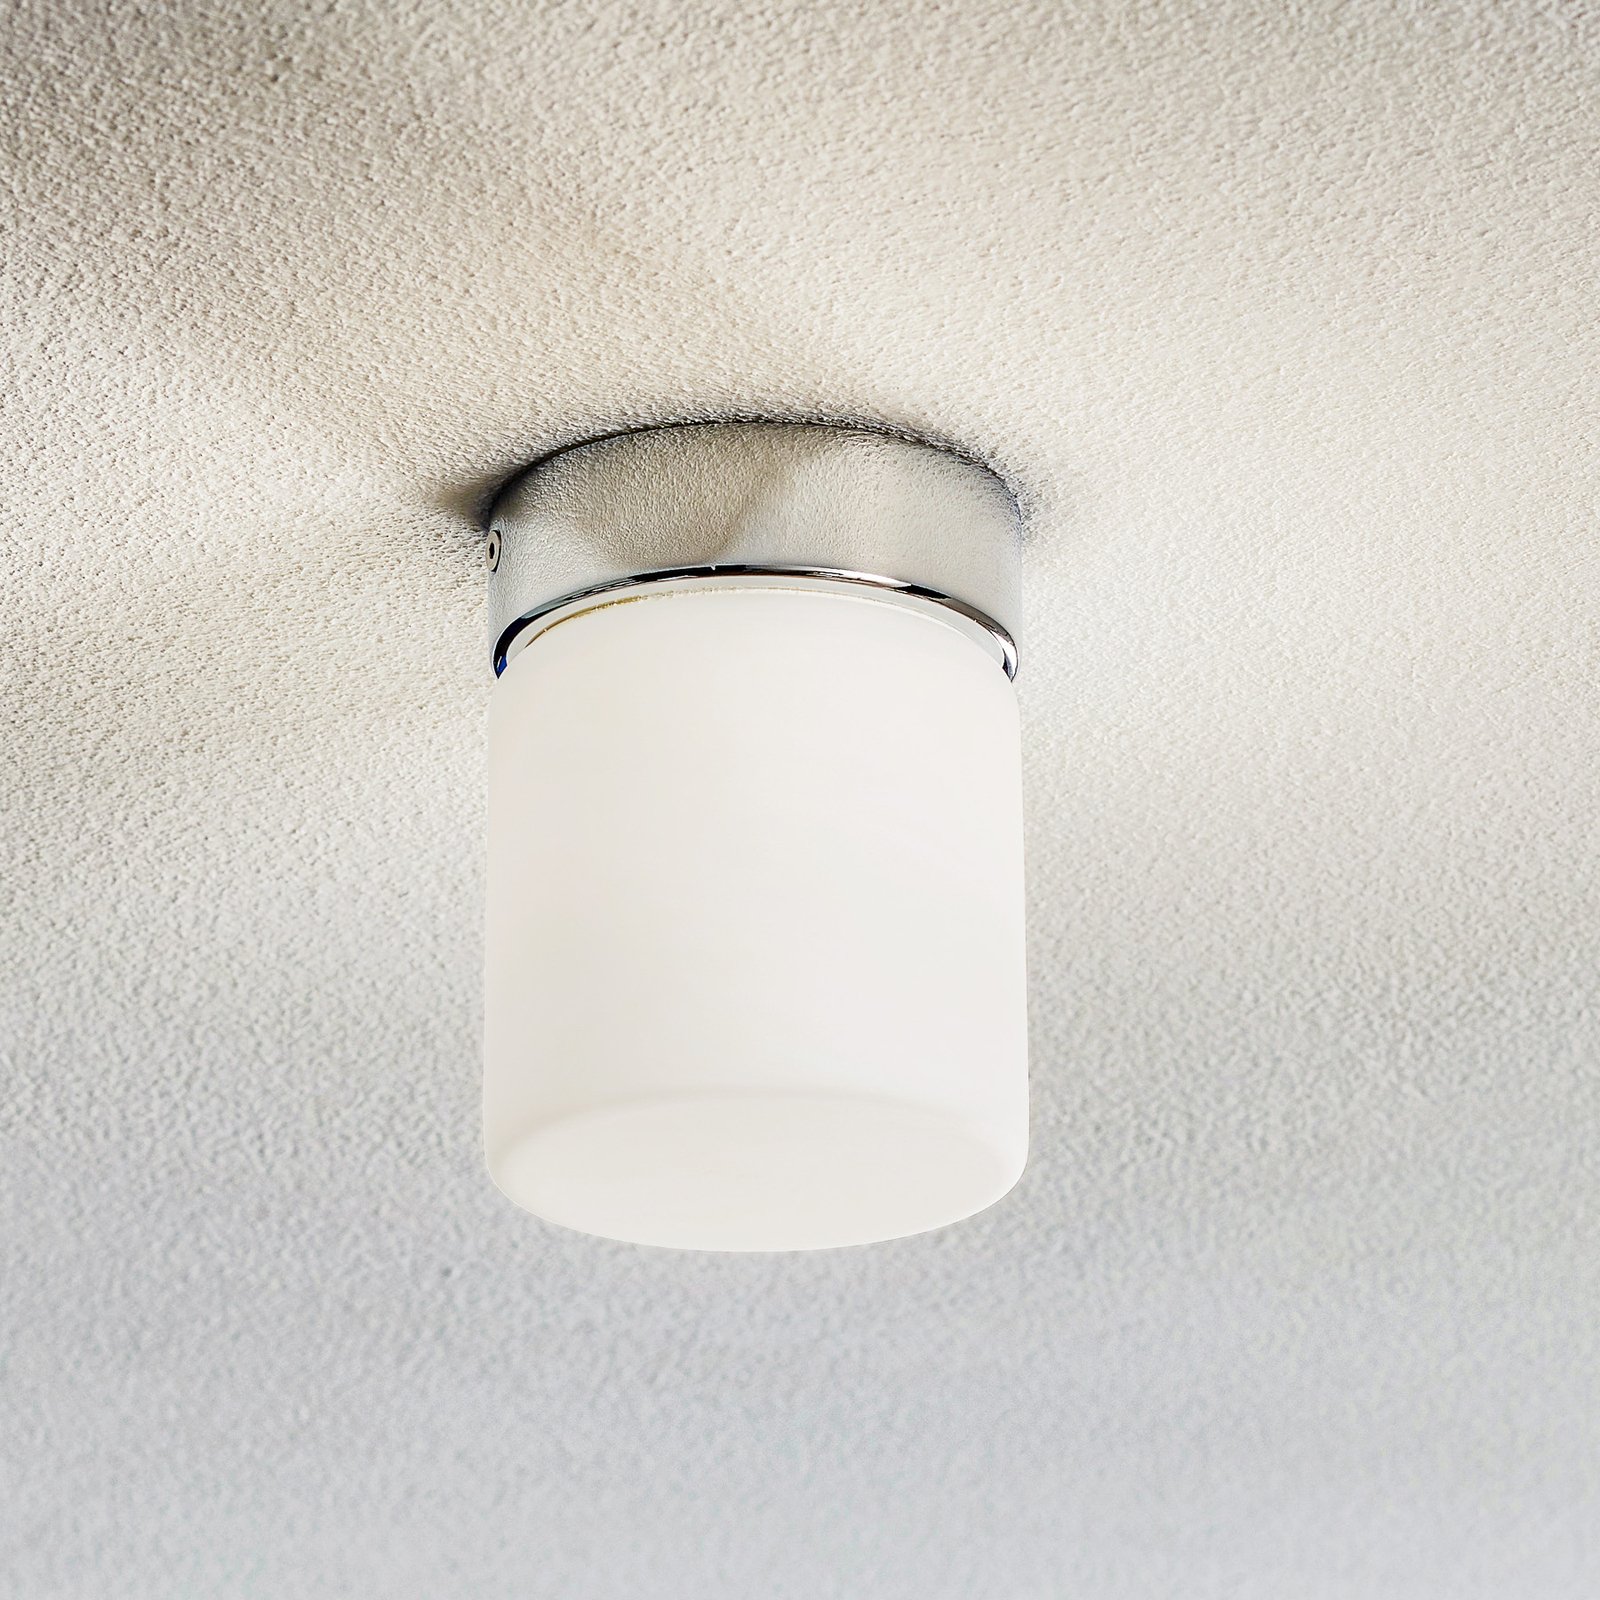 Helestra Keto LED bathroom ceiling light, cylinder